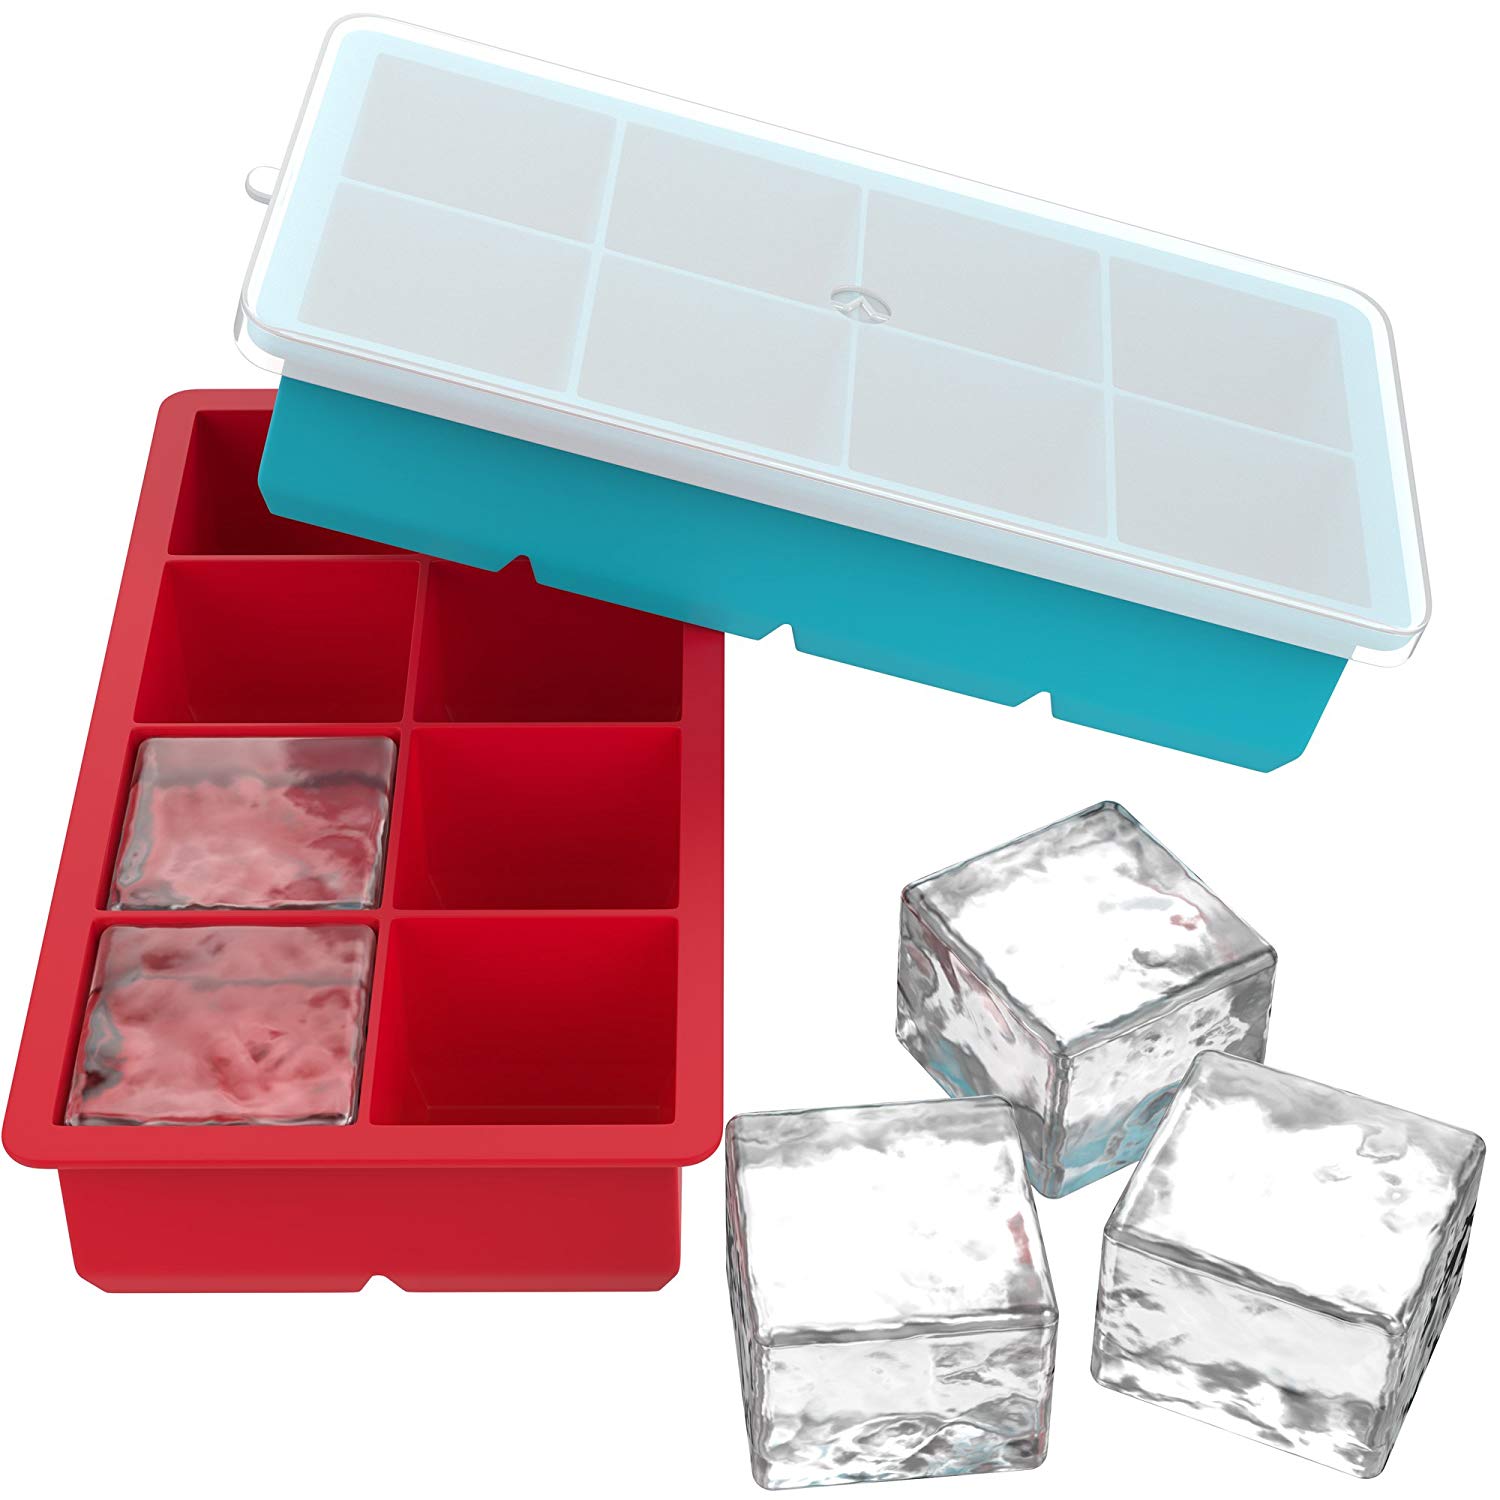 Vremi Large Silicone Ice Cube Tray, 8-Cube